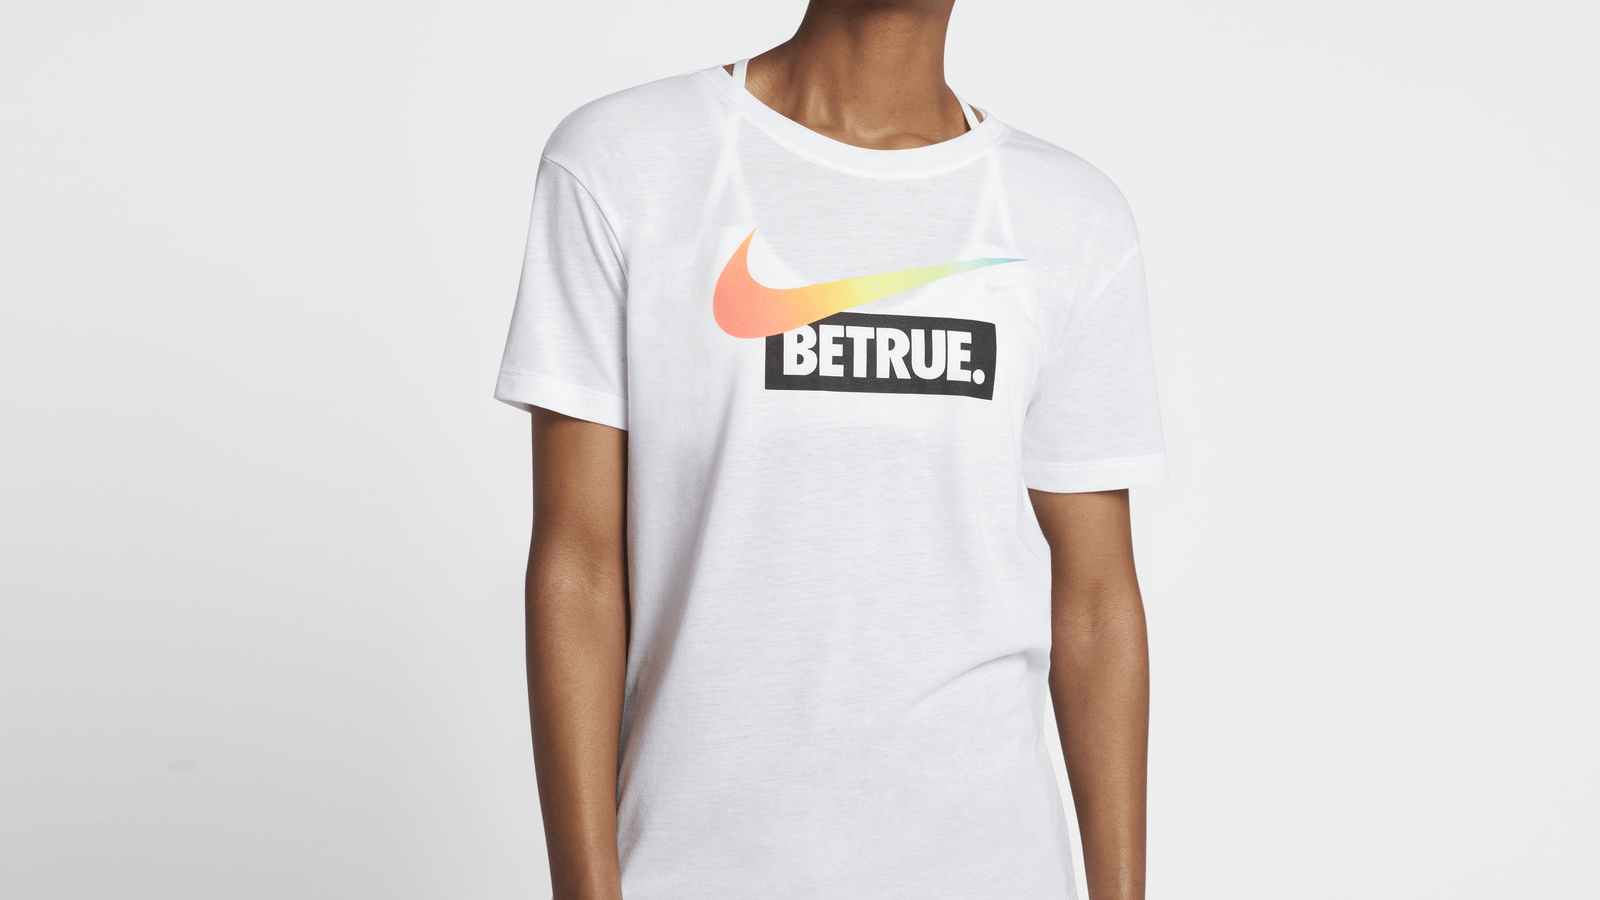 BeTrue - Nike